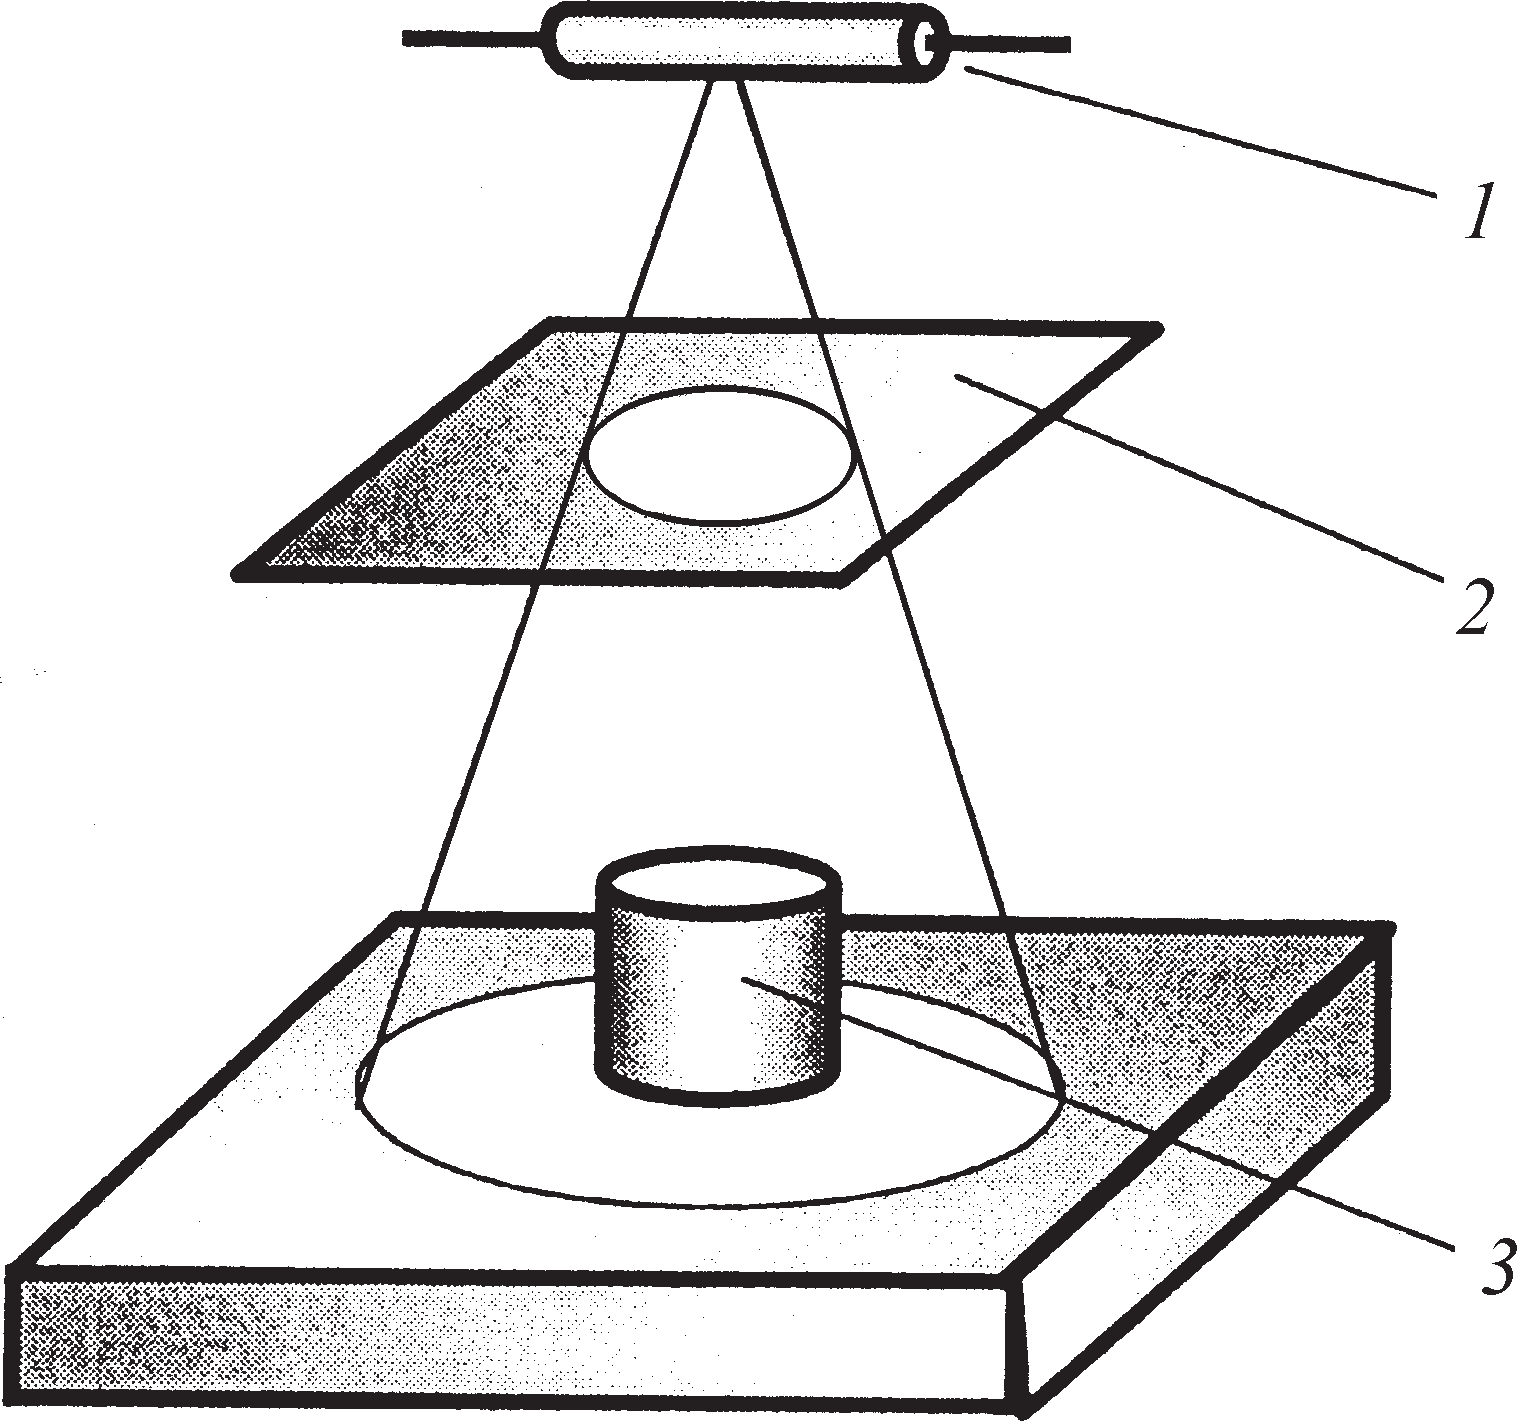 Схема контроля детали посредством люминескопа